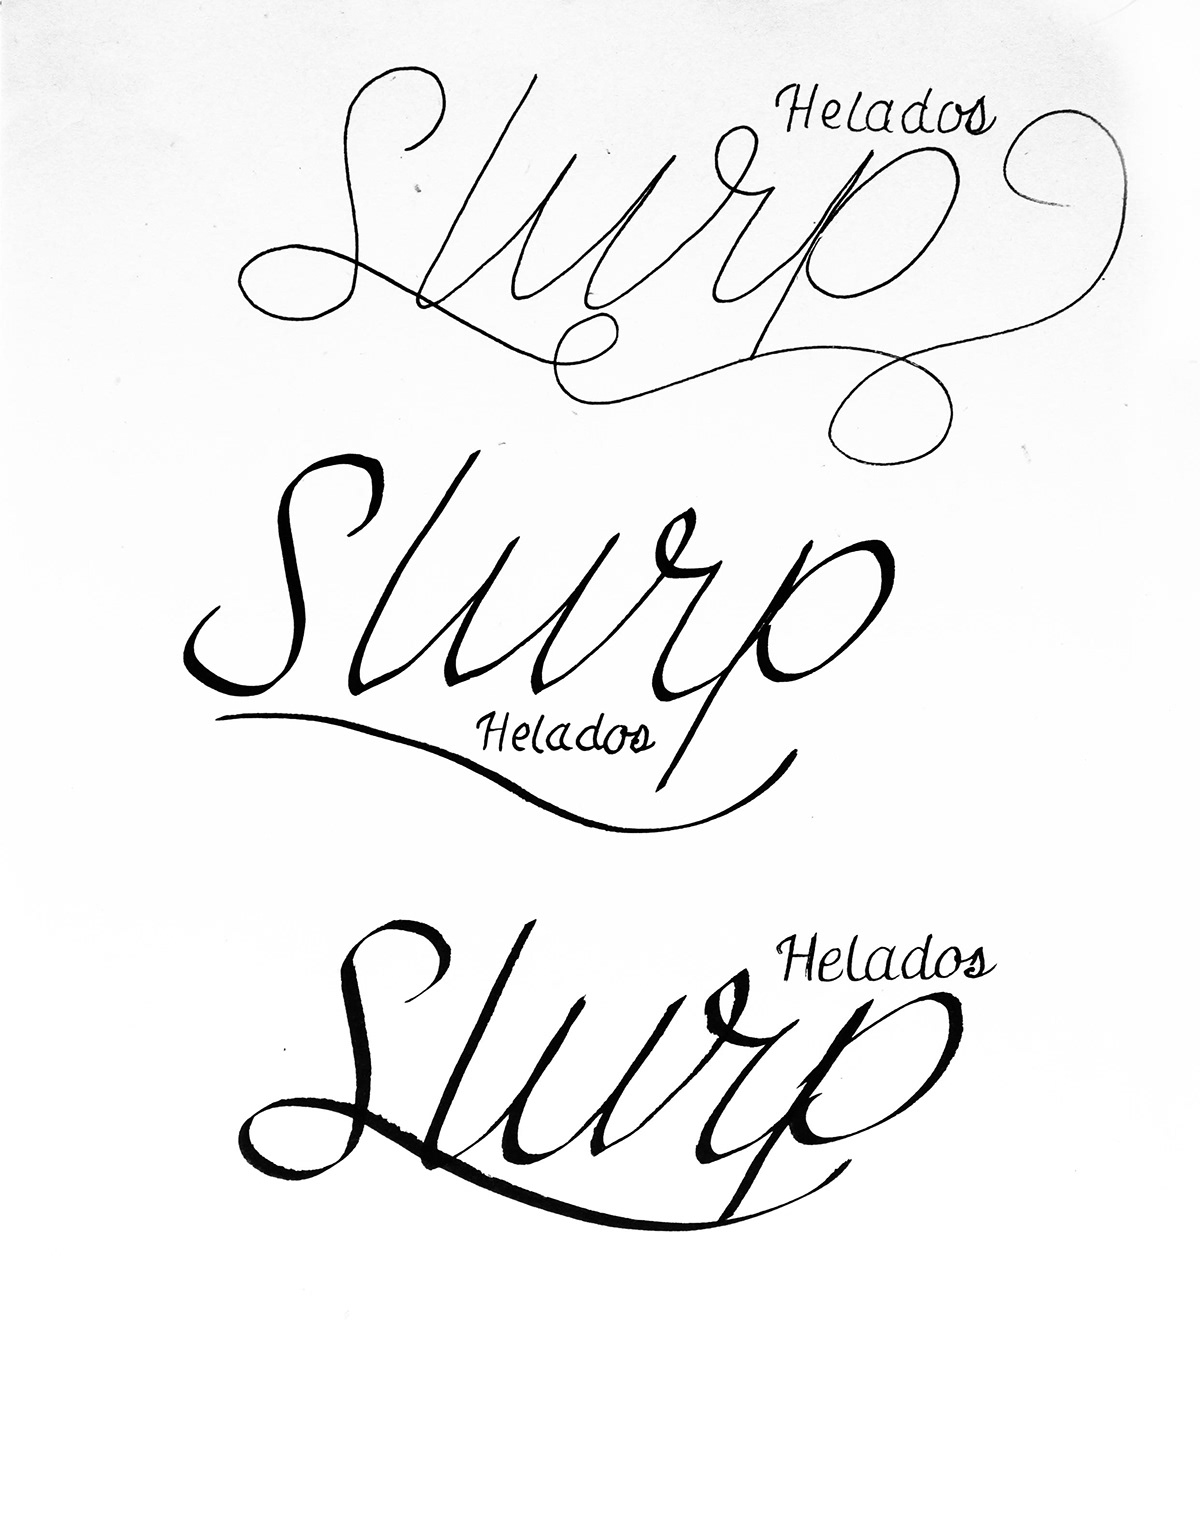 slurp InDesign lettering ice cream brochure